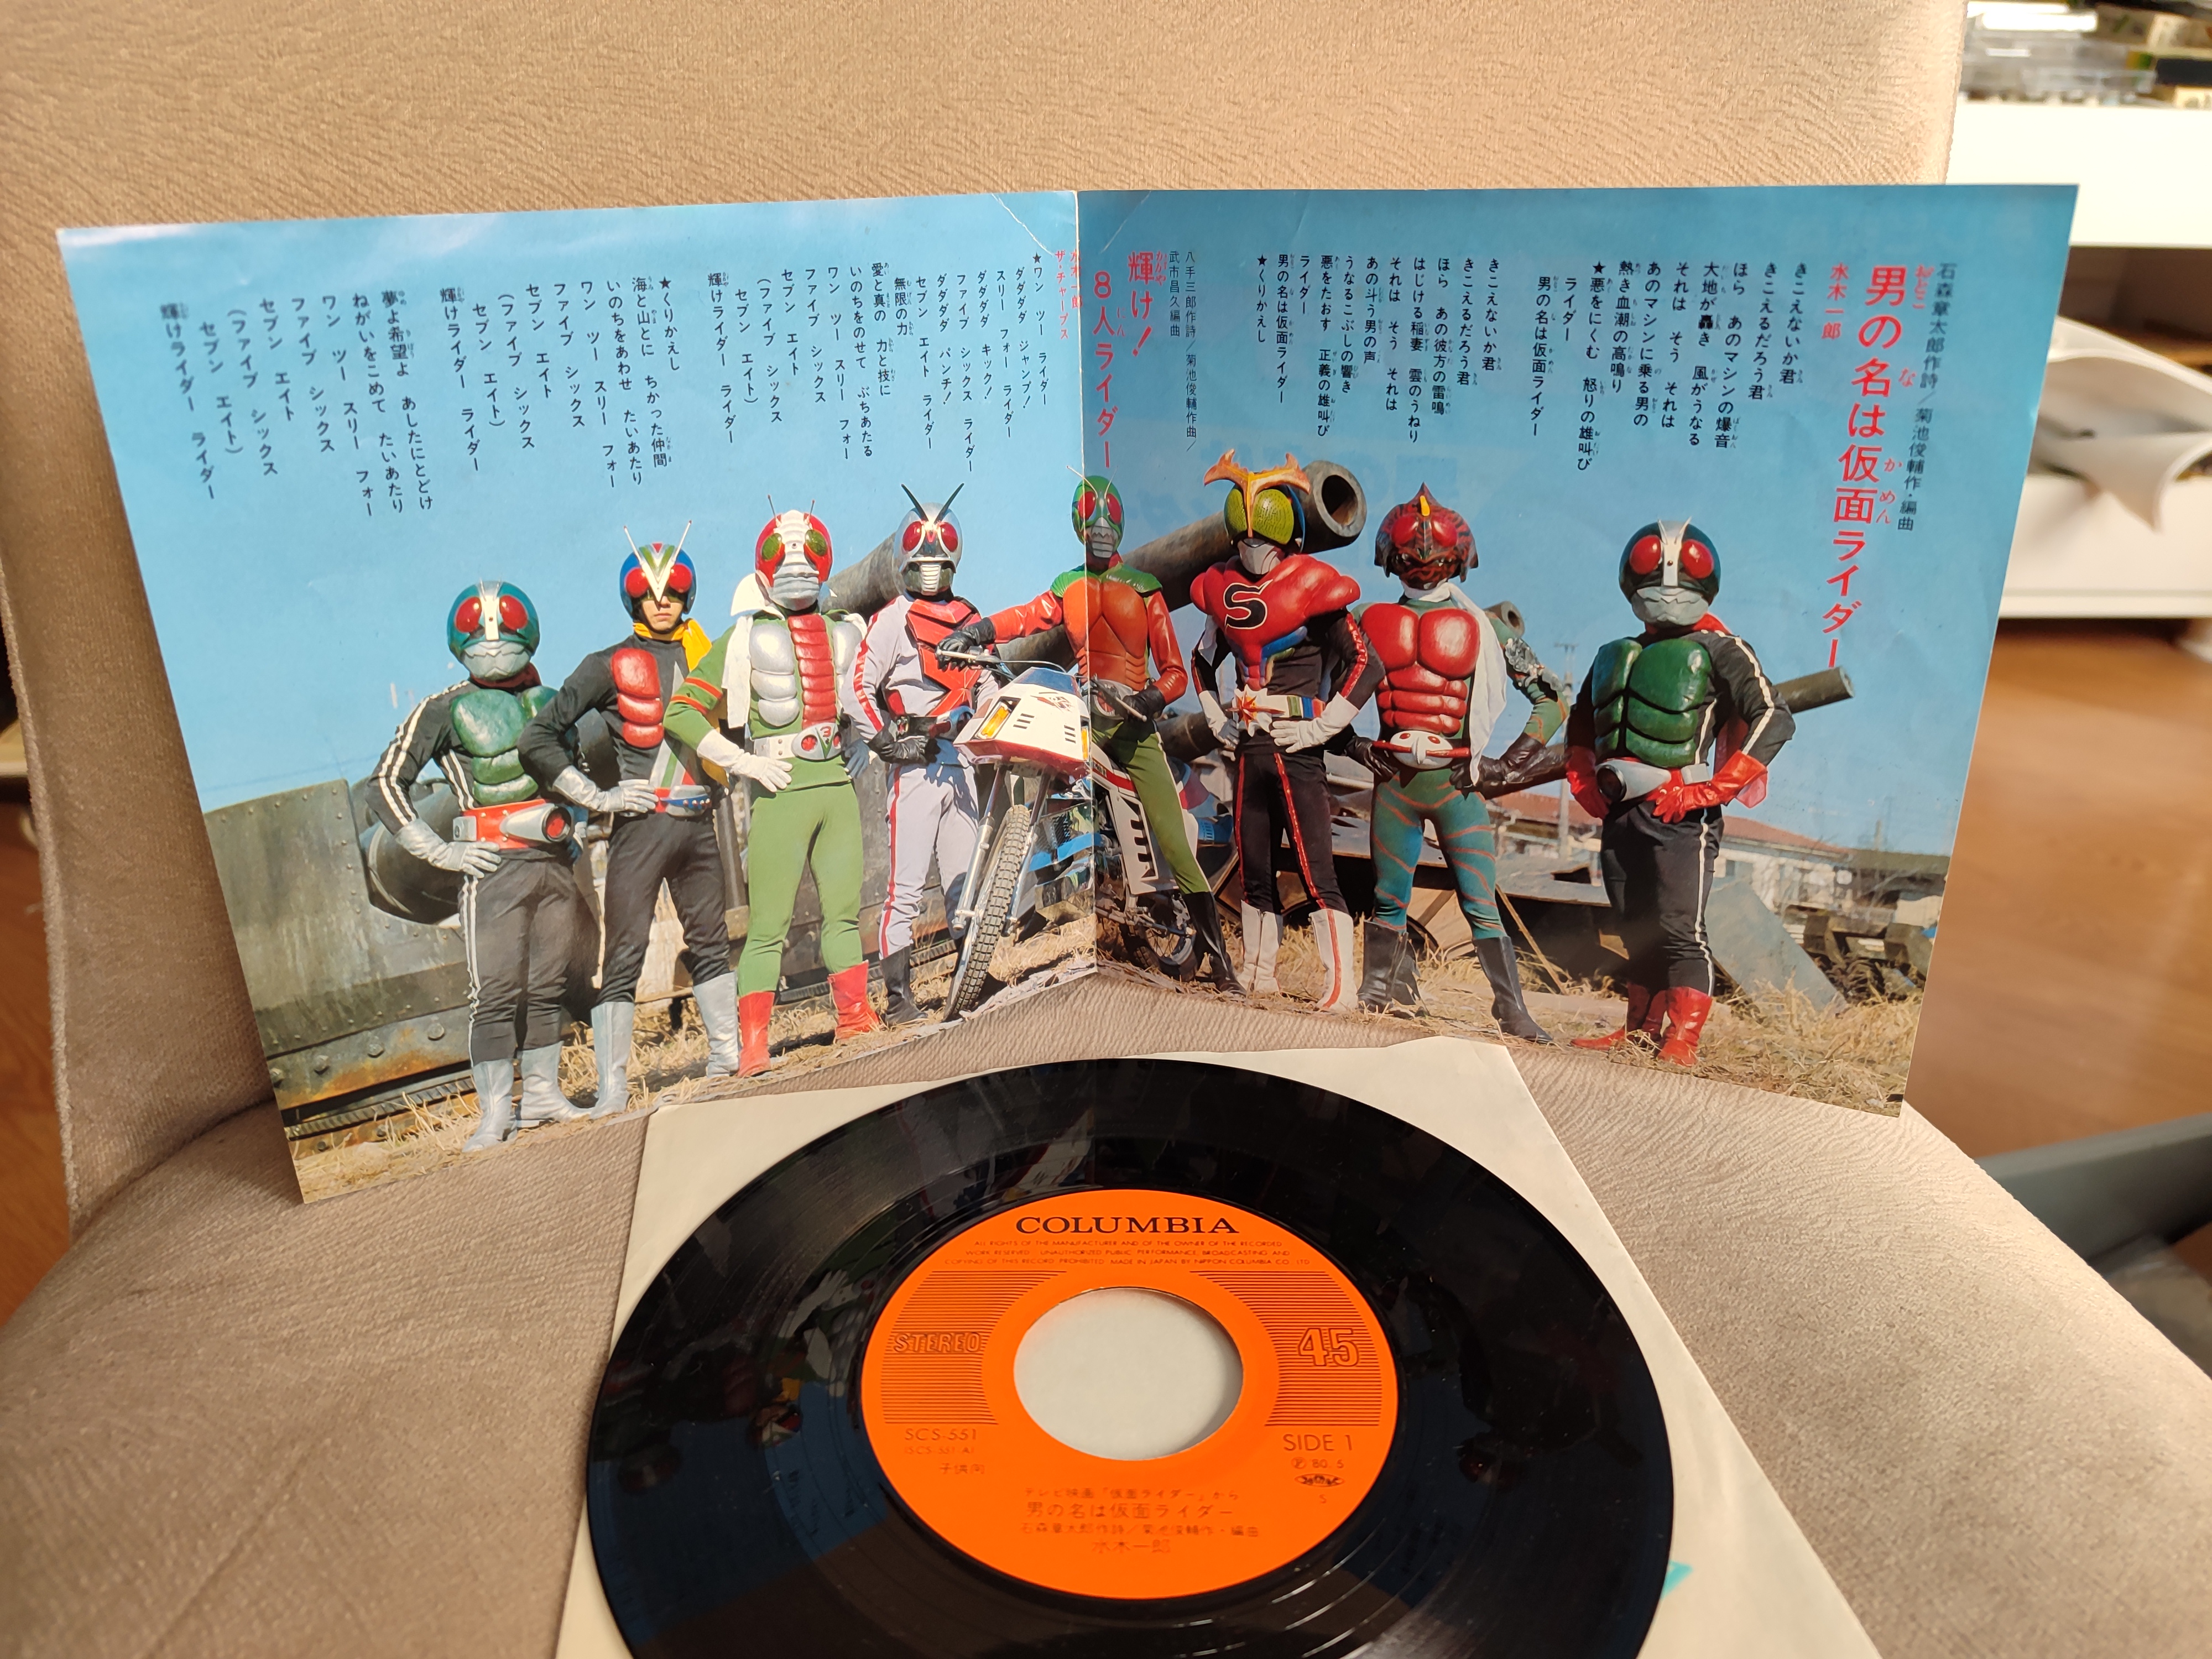 Kamen Rider Dizisi Müziği - Shunsuke Kikuchi - 1980 Japonya Basım Nadir Soundtrack 45’lik Plak 2.el